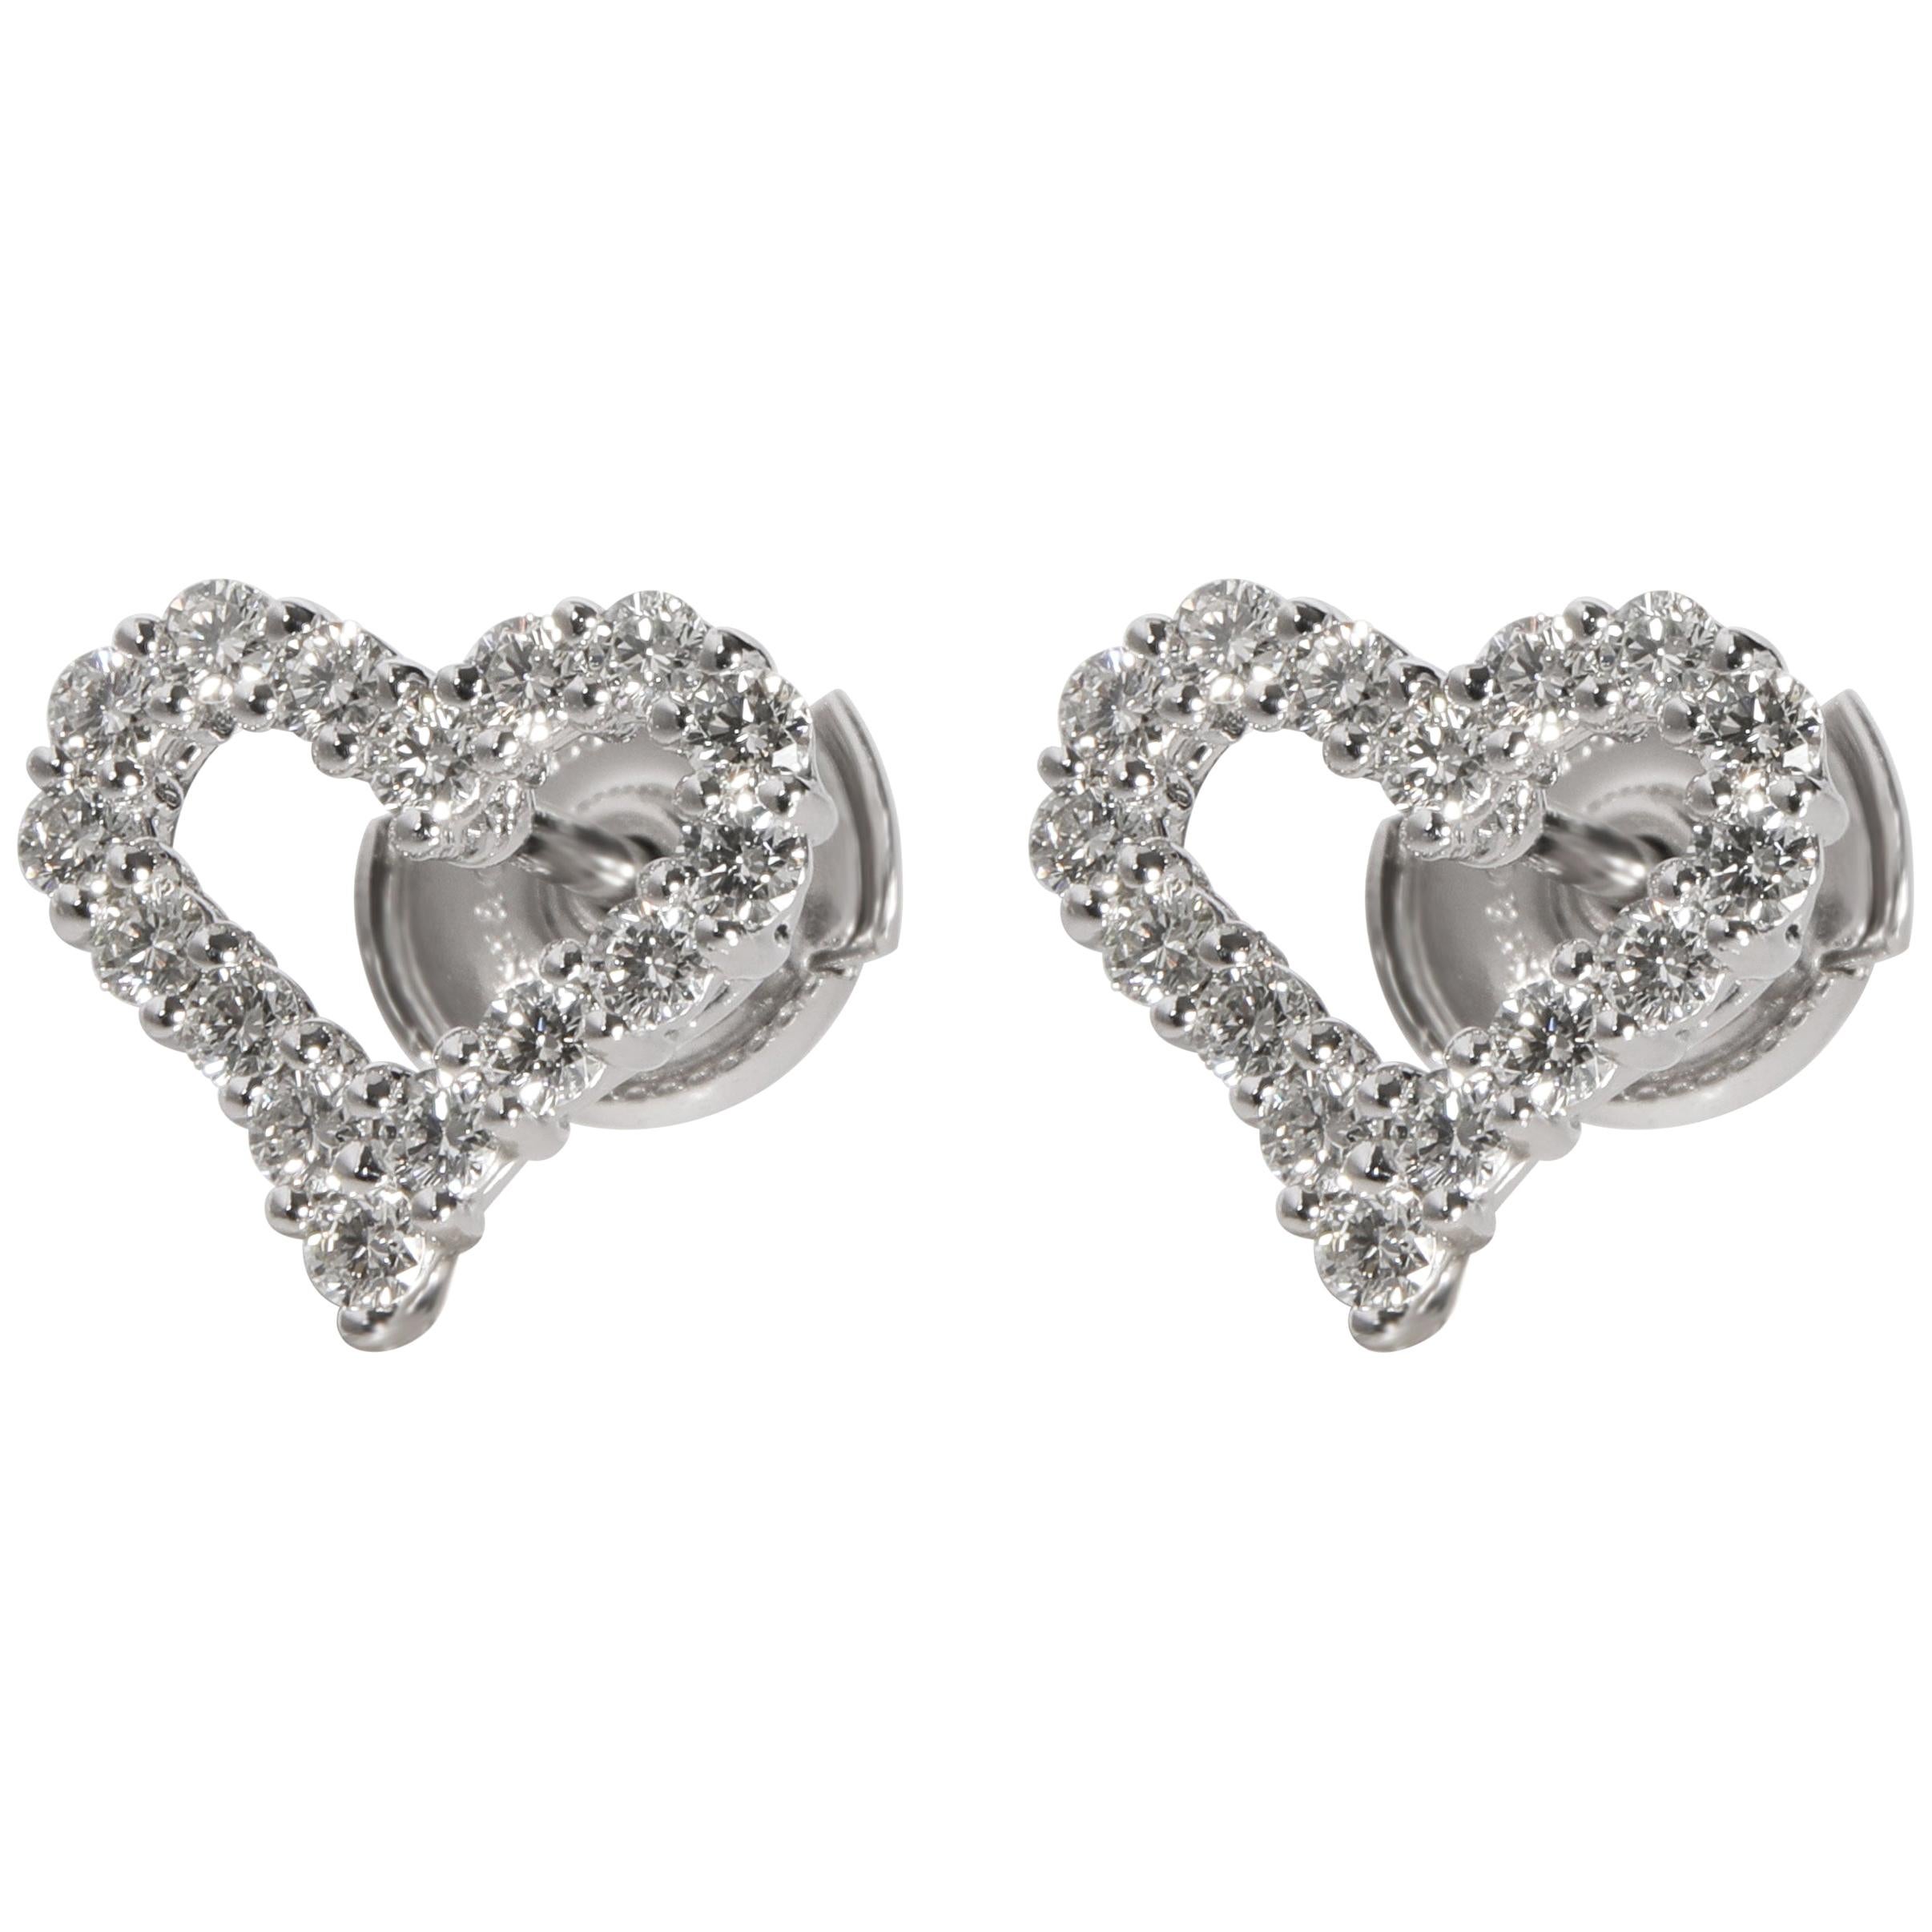 Tiffany & Co. Diamond Heart Earrings in Platinum 0.57 Carat